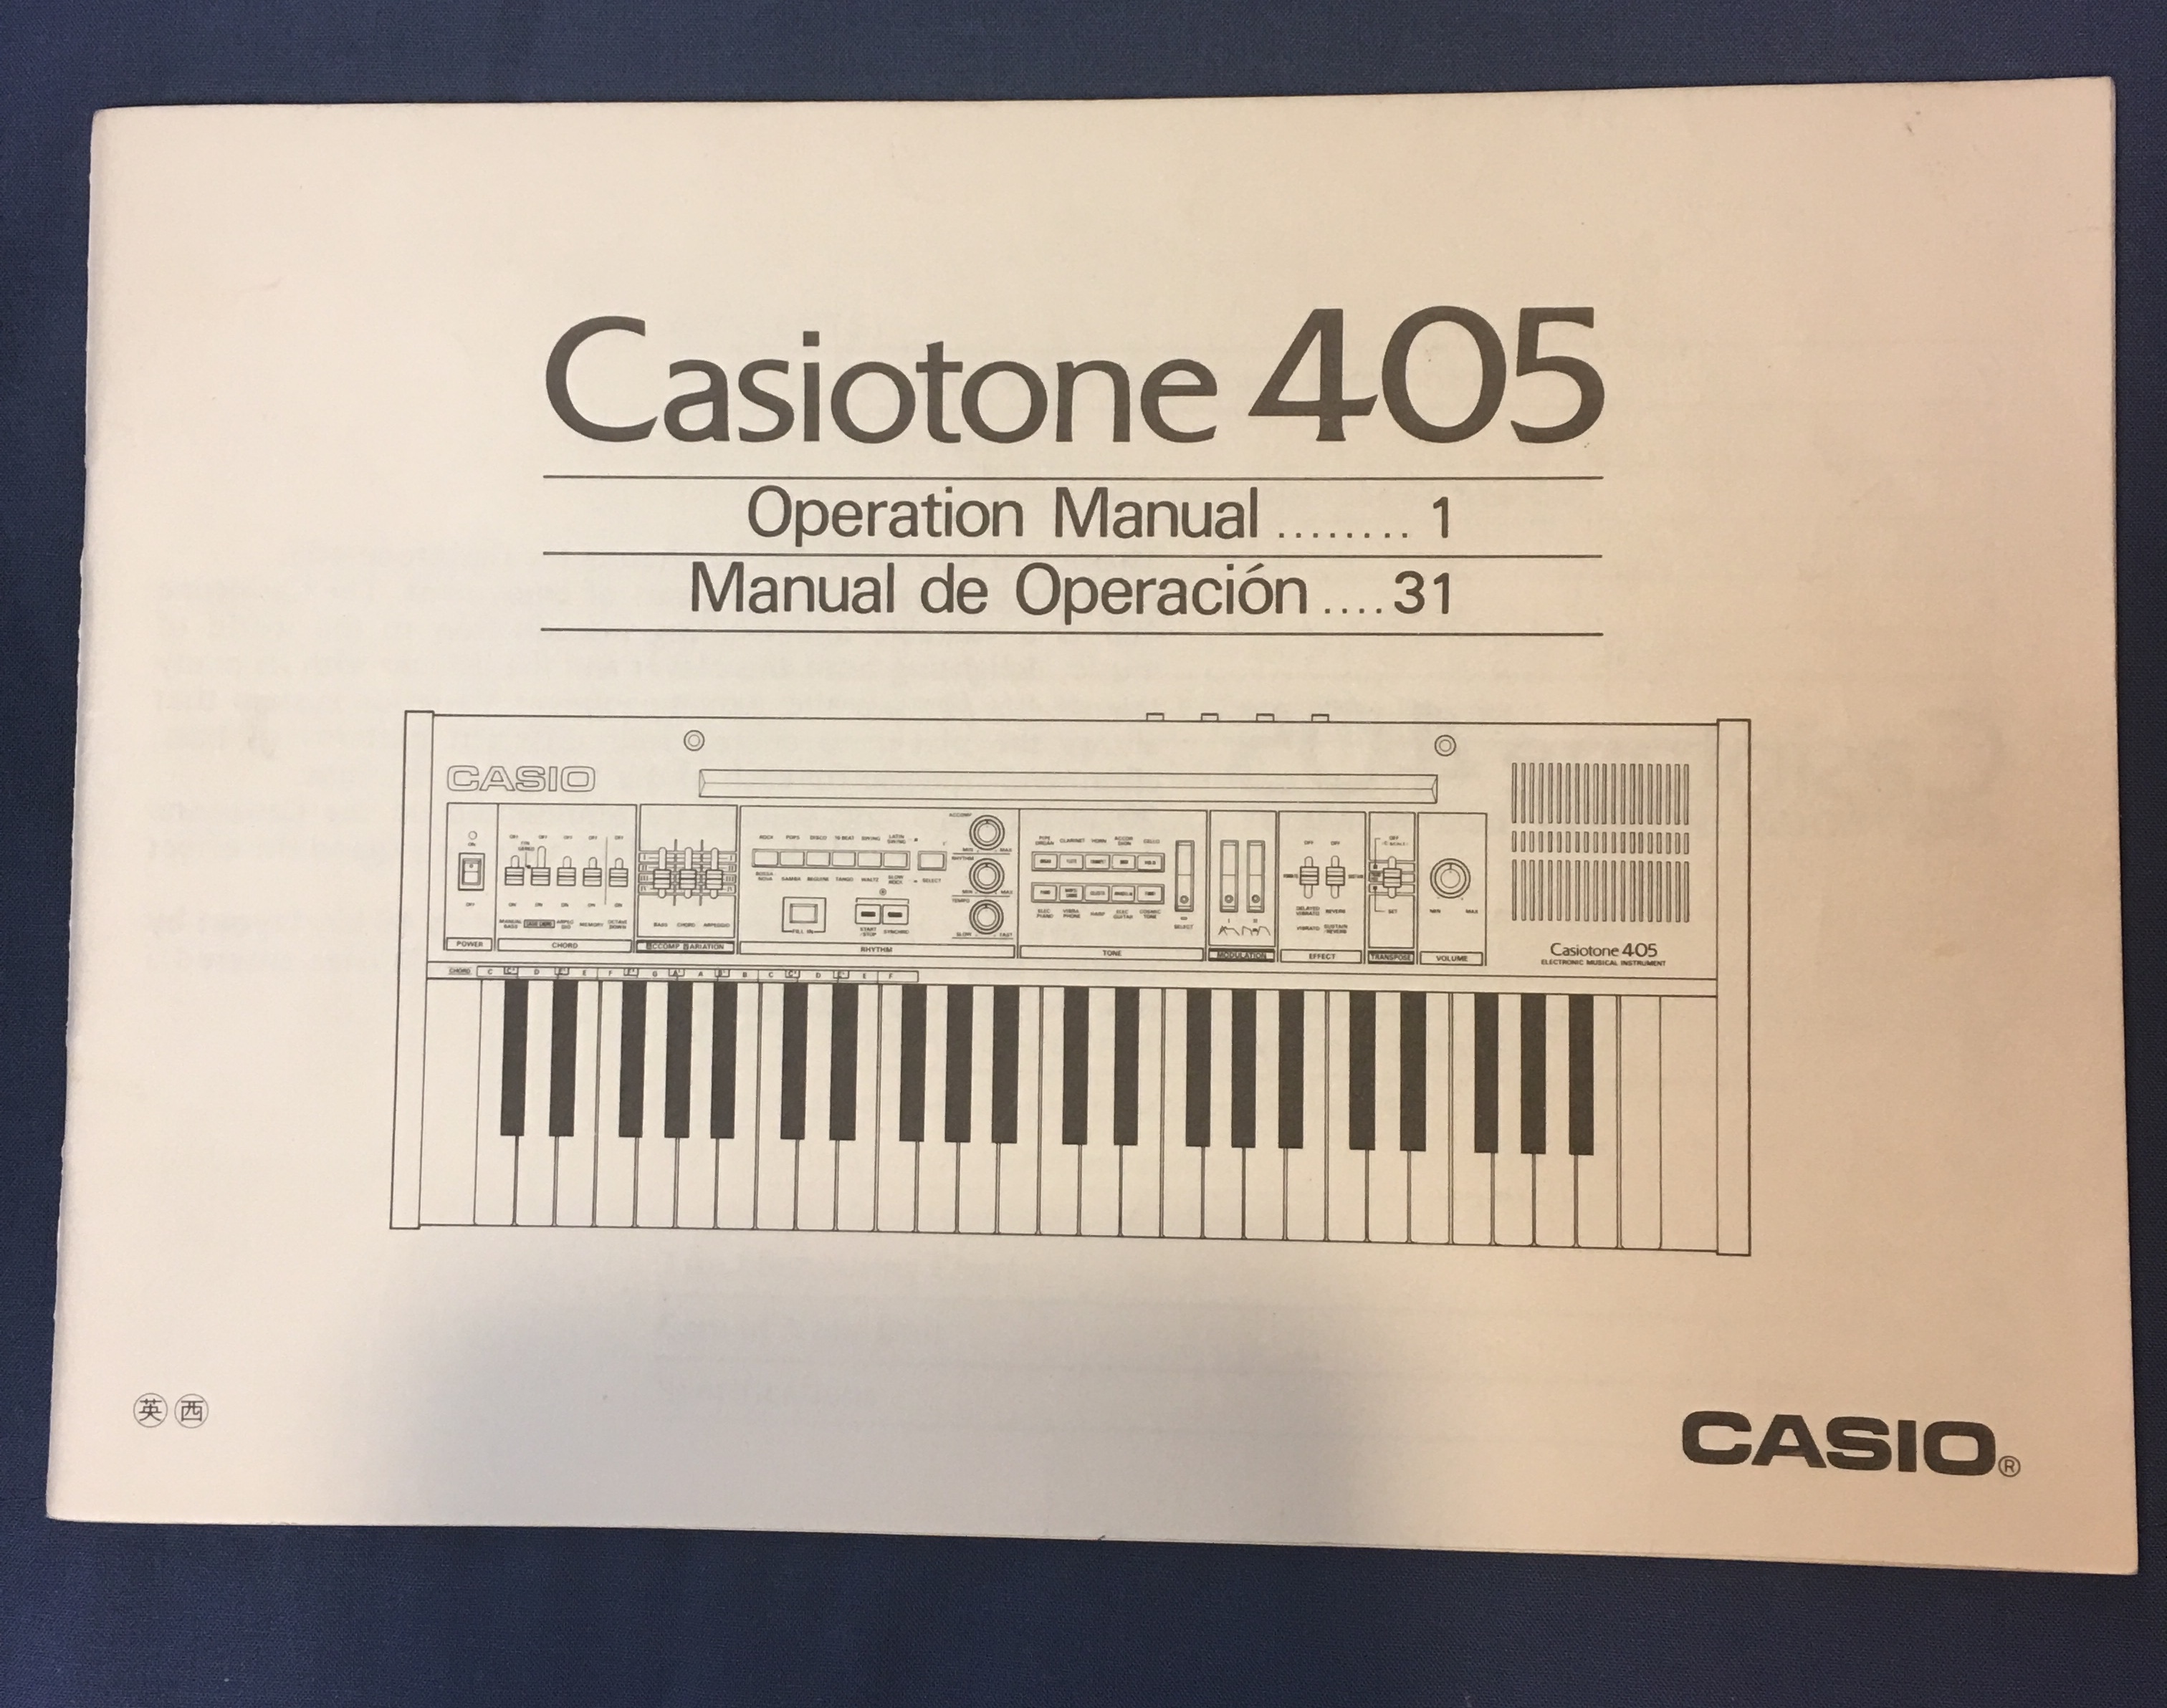 Welcome - Casio Keyboard Junkyard